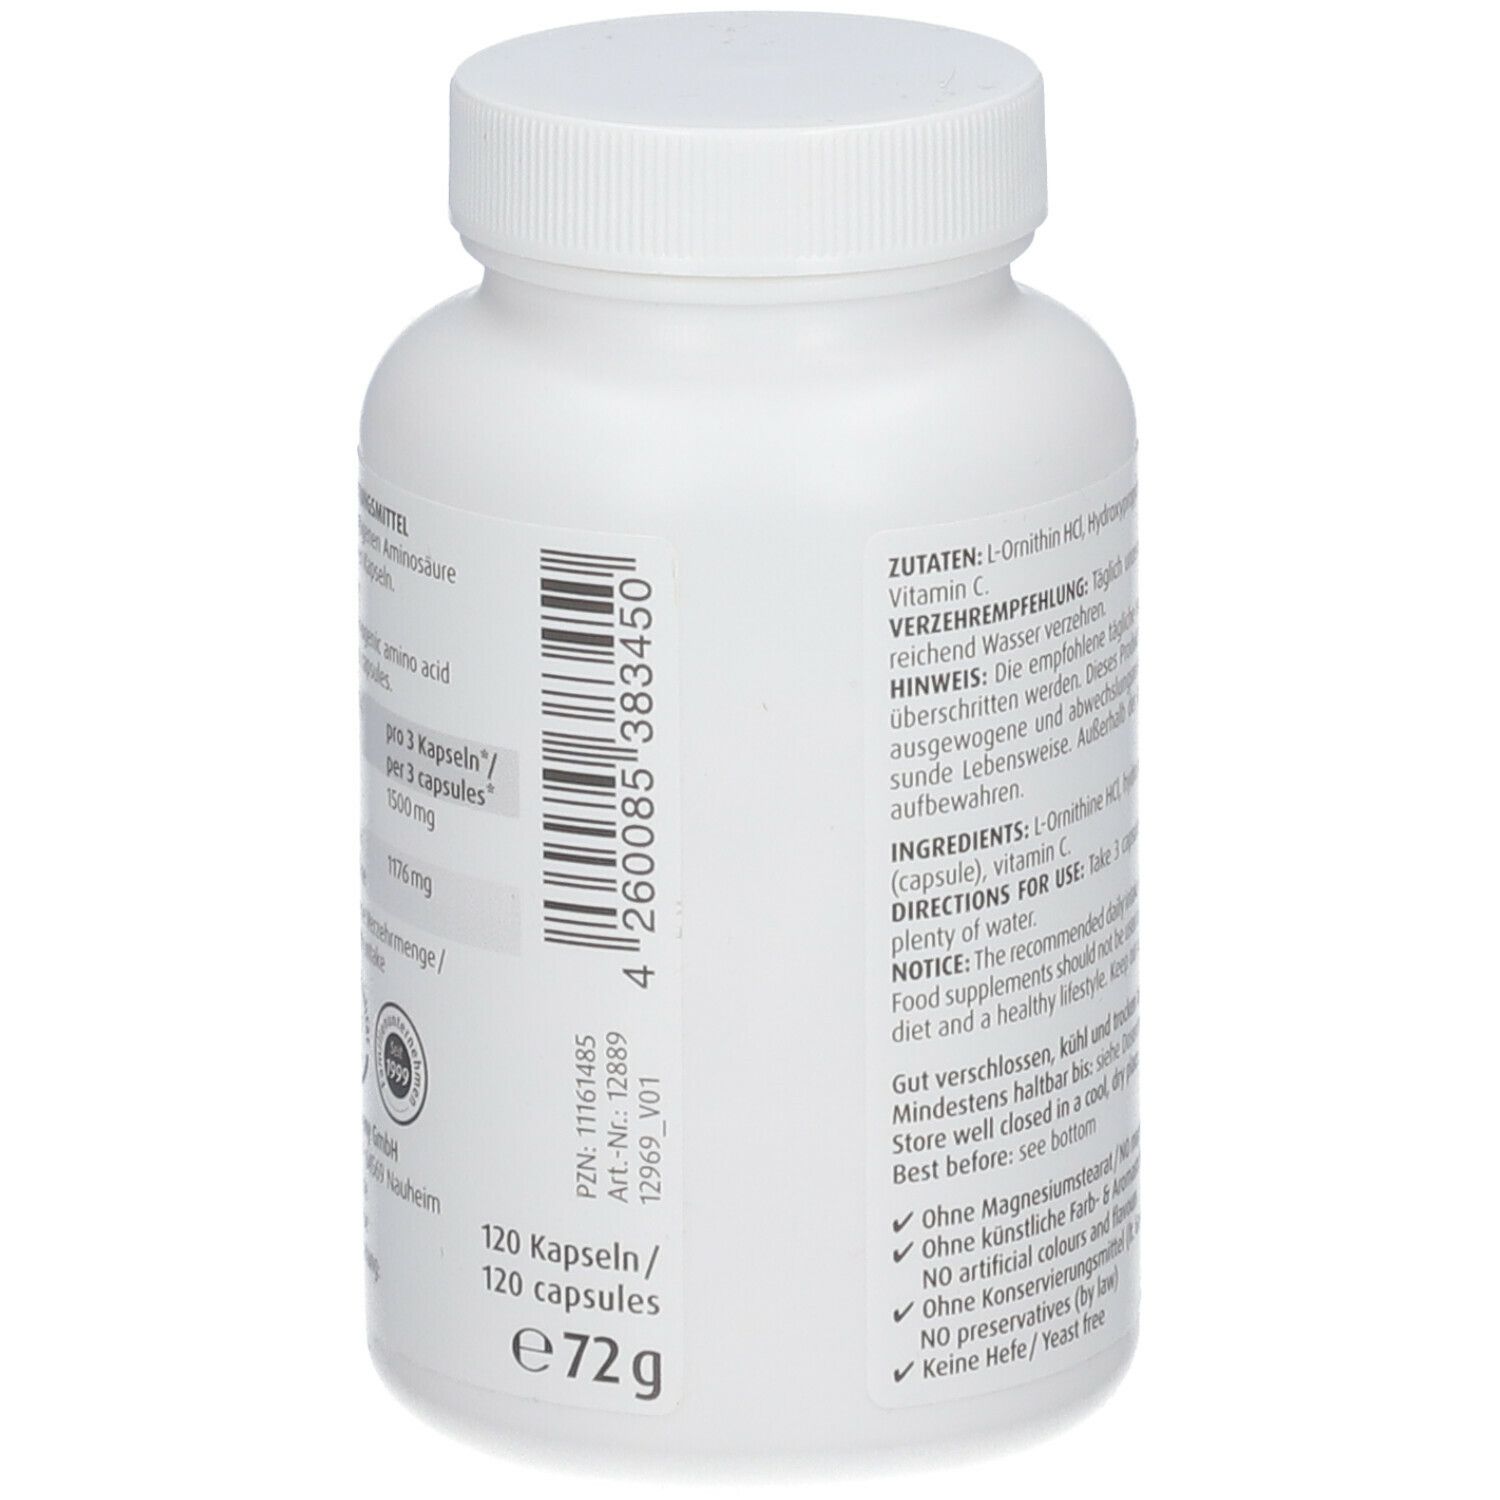 ZeinPharma® L Ornithin Kapseln 500 mg